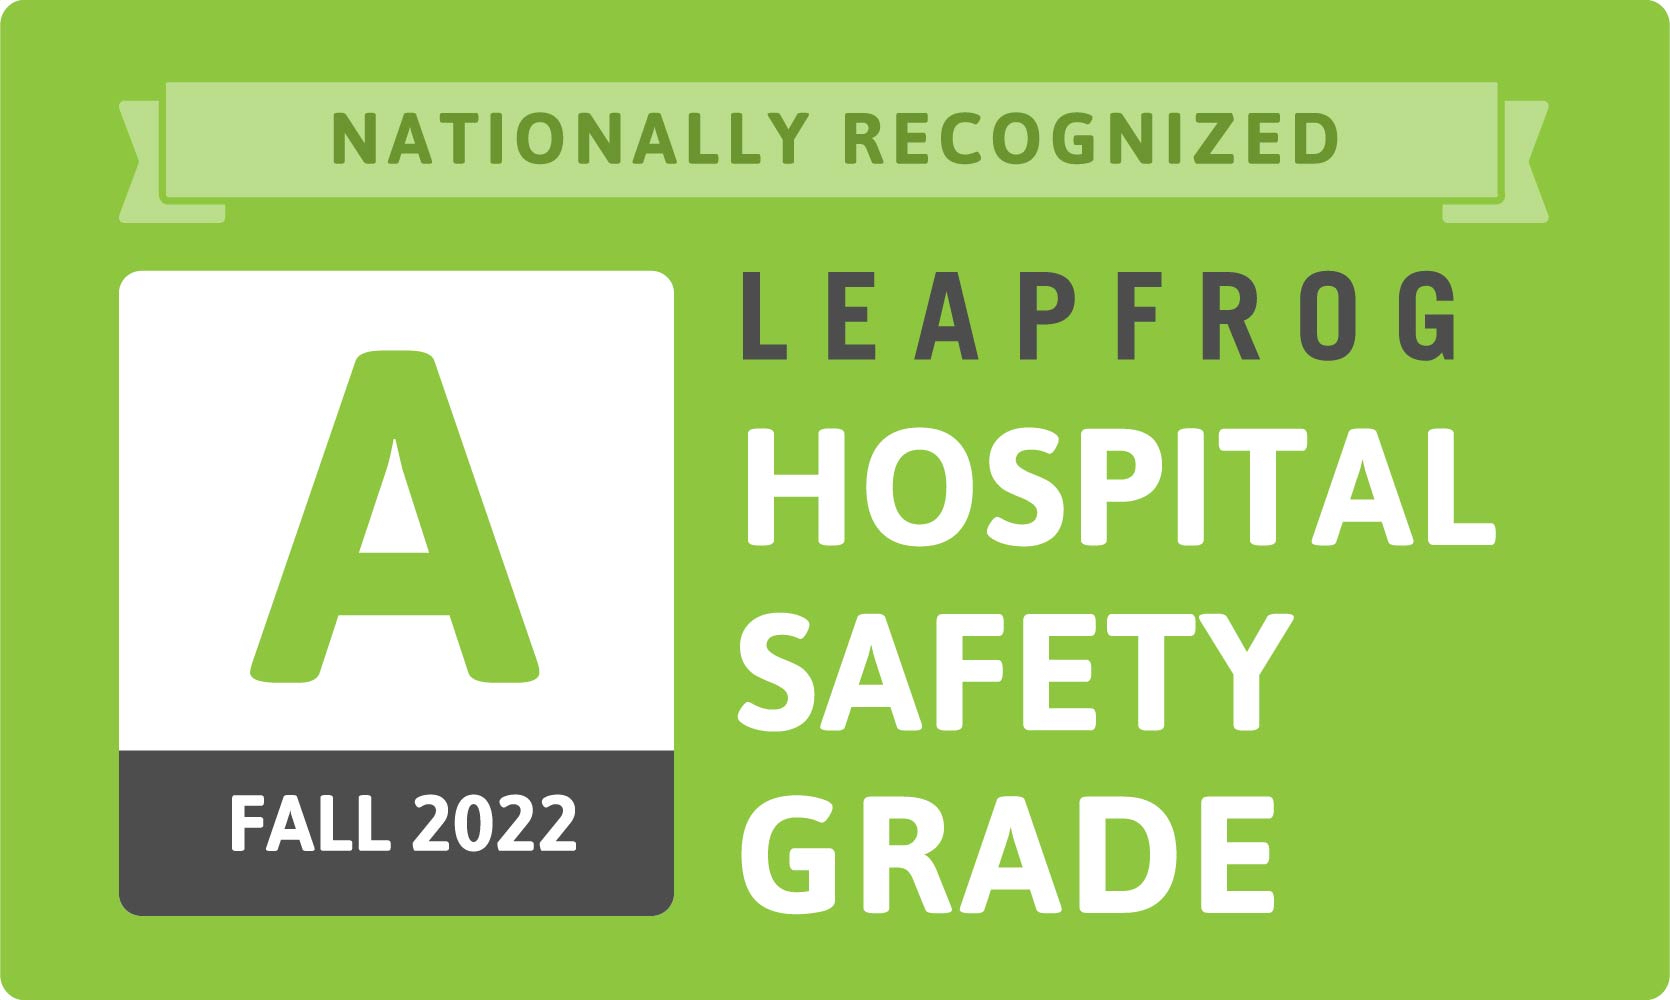 Fall 2022 Leapfrog Hospital Safety Grade